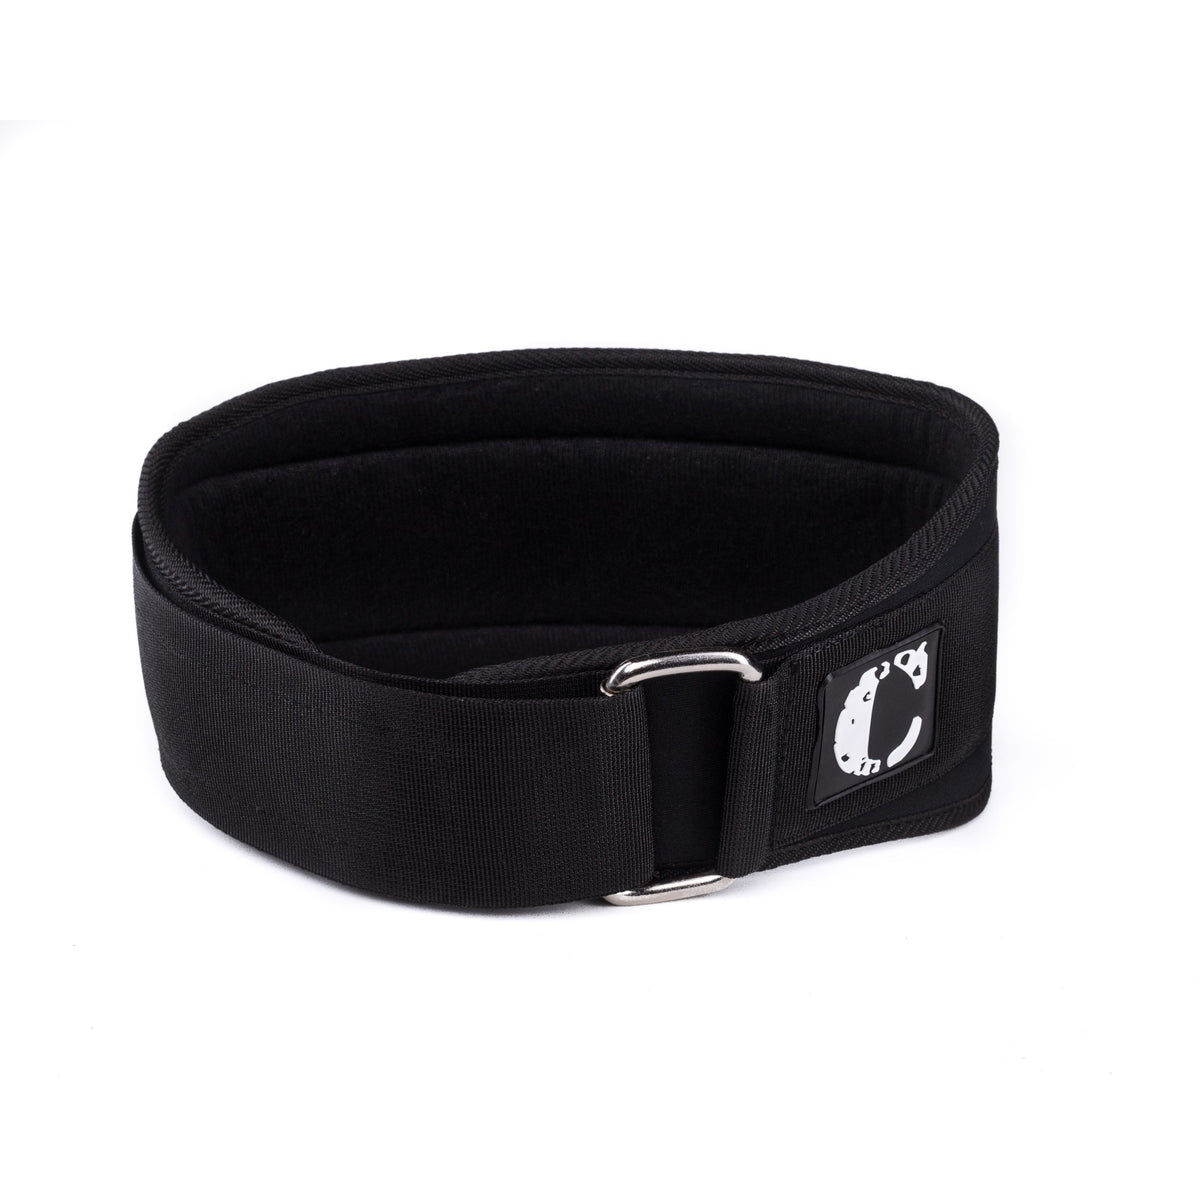 Weight Training Belt with Dual Nylon Closure - Black